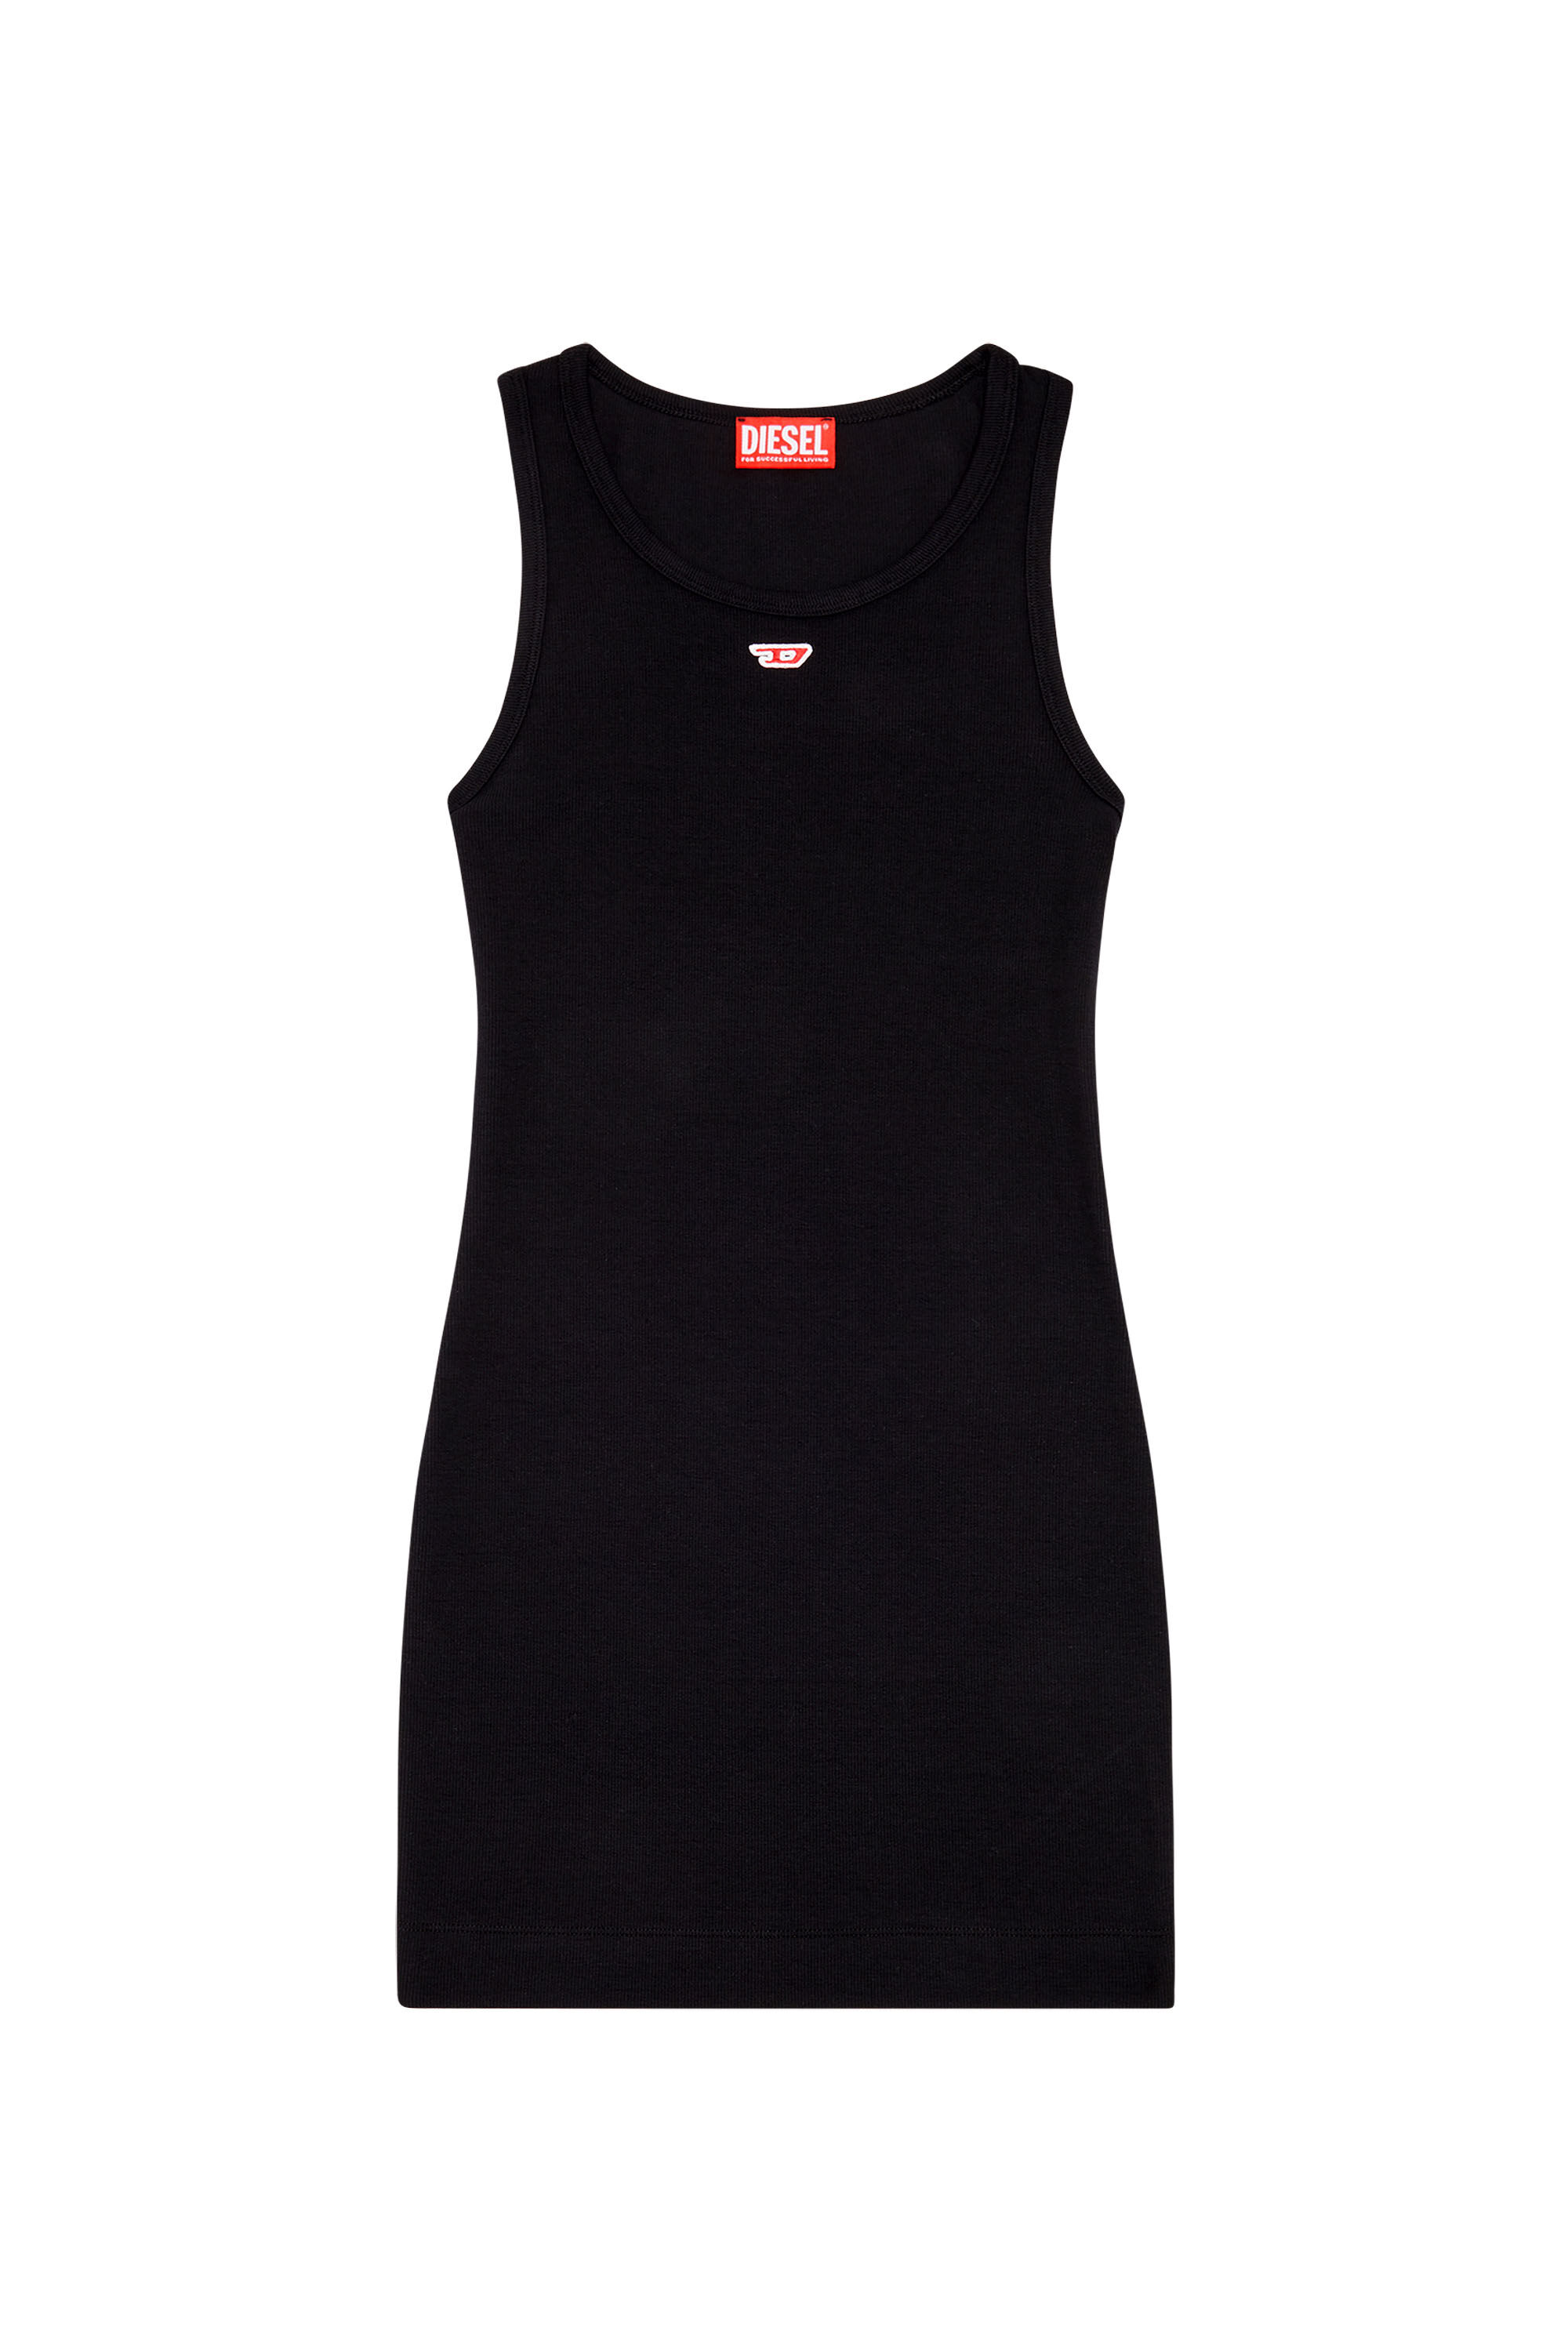 Diesel - D-TANK-D, Femme Mini-robe débardeur avec logo D in Noir - Image 2